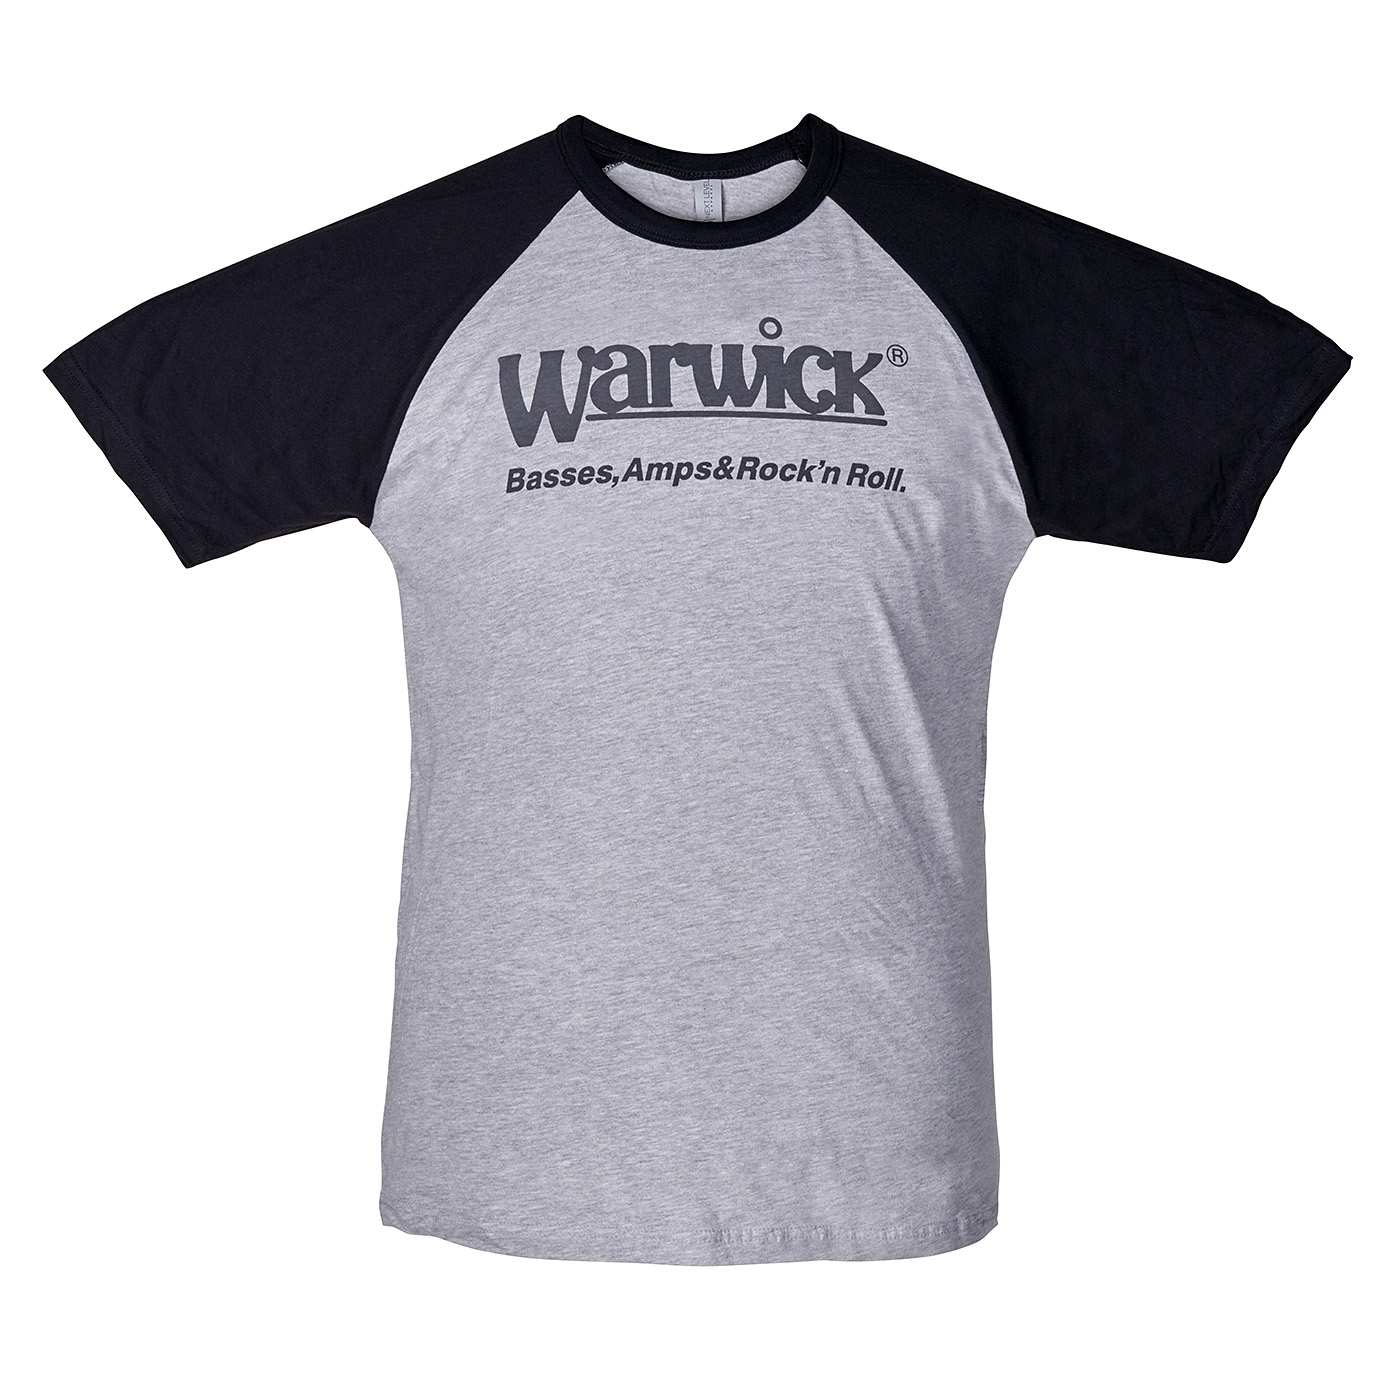 Warwick Promo - Basses, Amps & Rock'n'Roll Baseball T-Shirt, Gray/Black - Size S